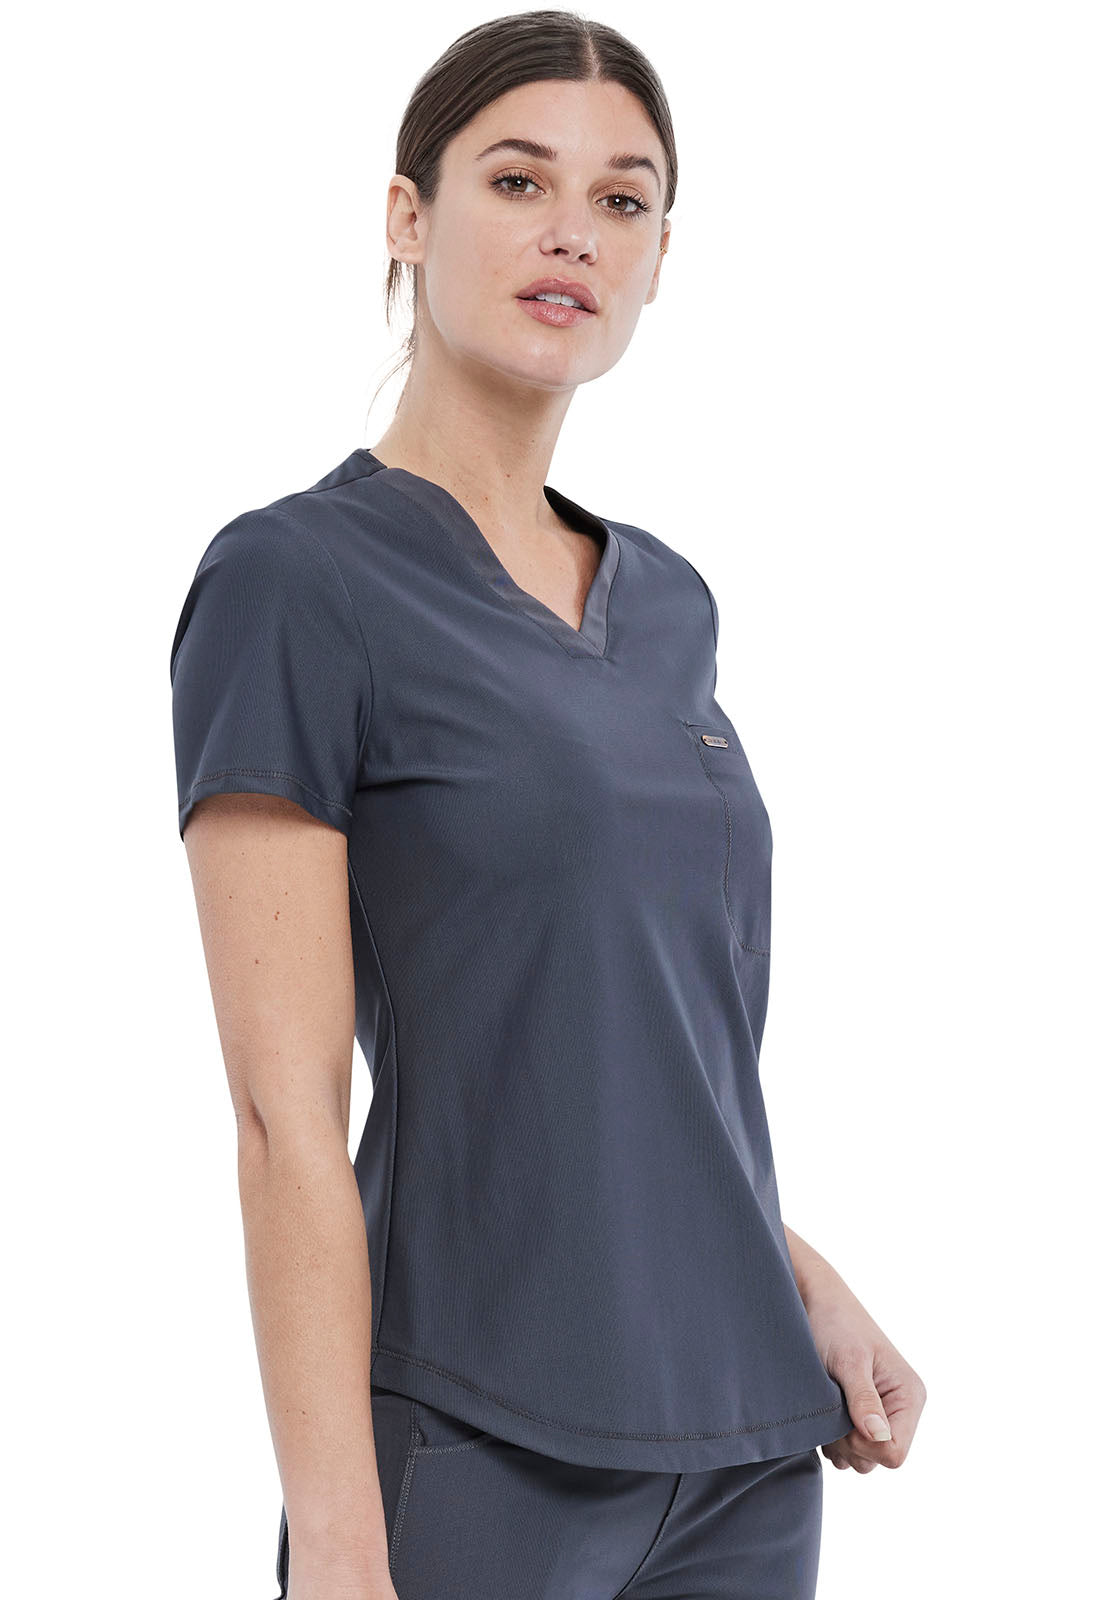 women's medical uniform tops, fashionable nurses uniforms, Women's Cherokee Form Tuckable V-Neck Top